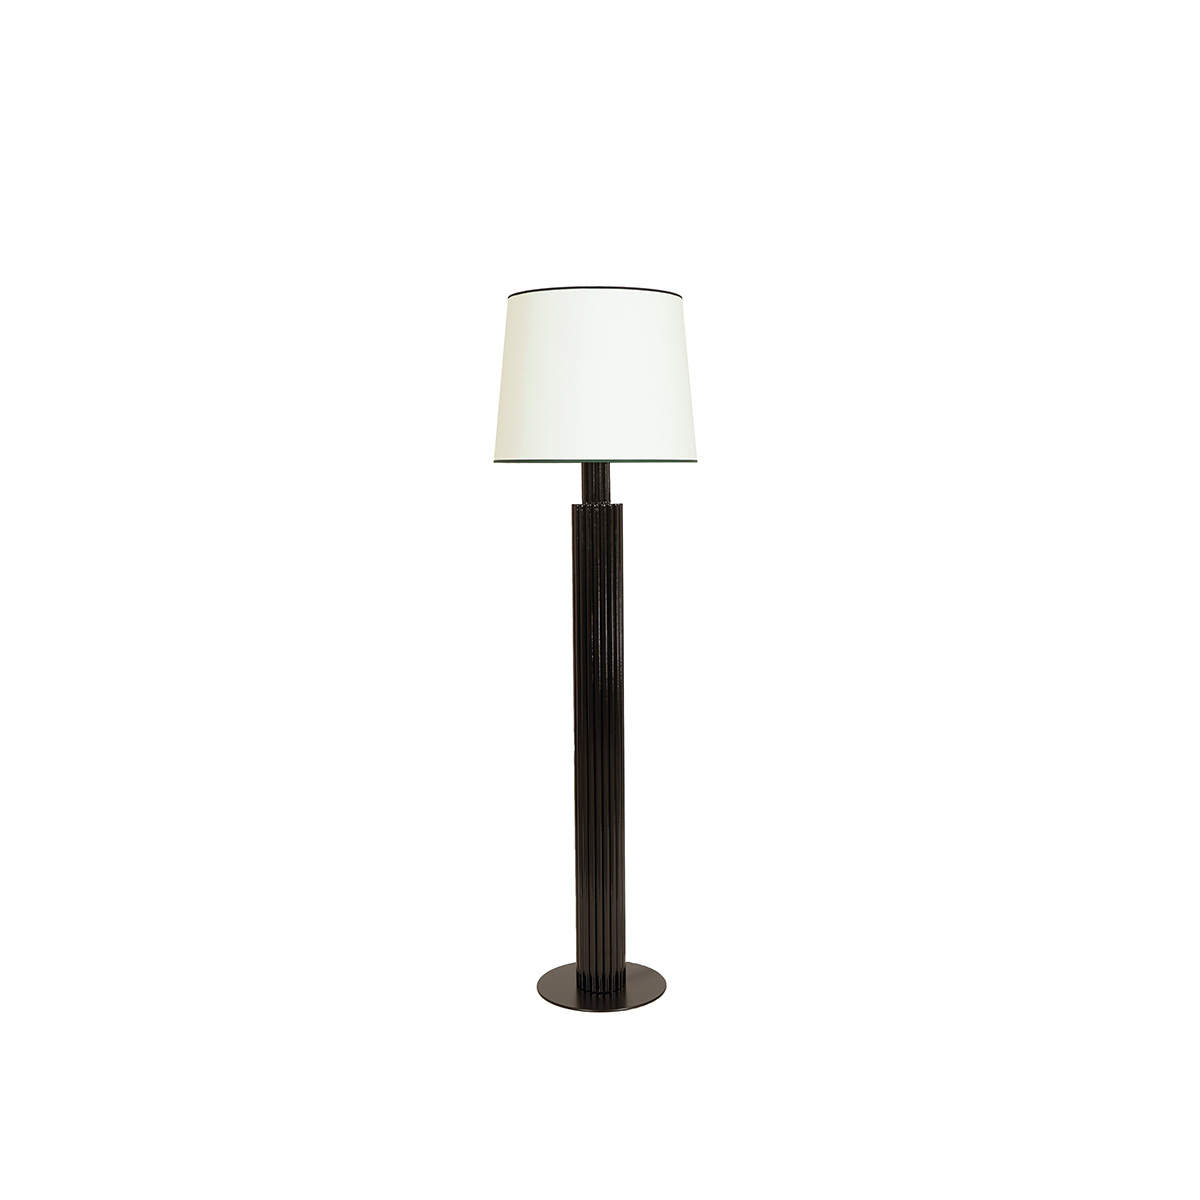 Floor Lamp Riviera, Black - H155 cm - Rattan / Cotton shade - image 1